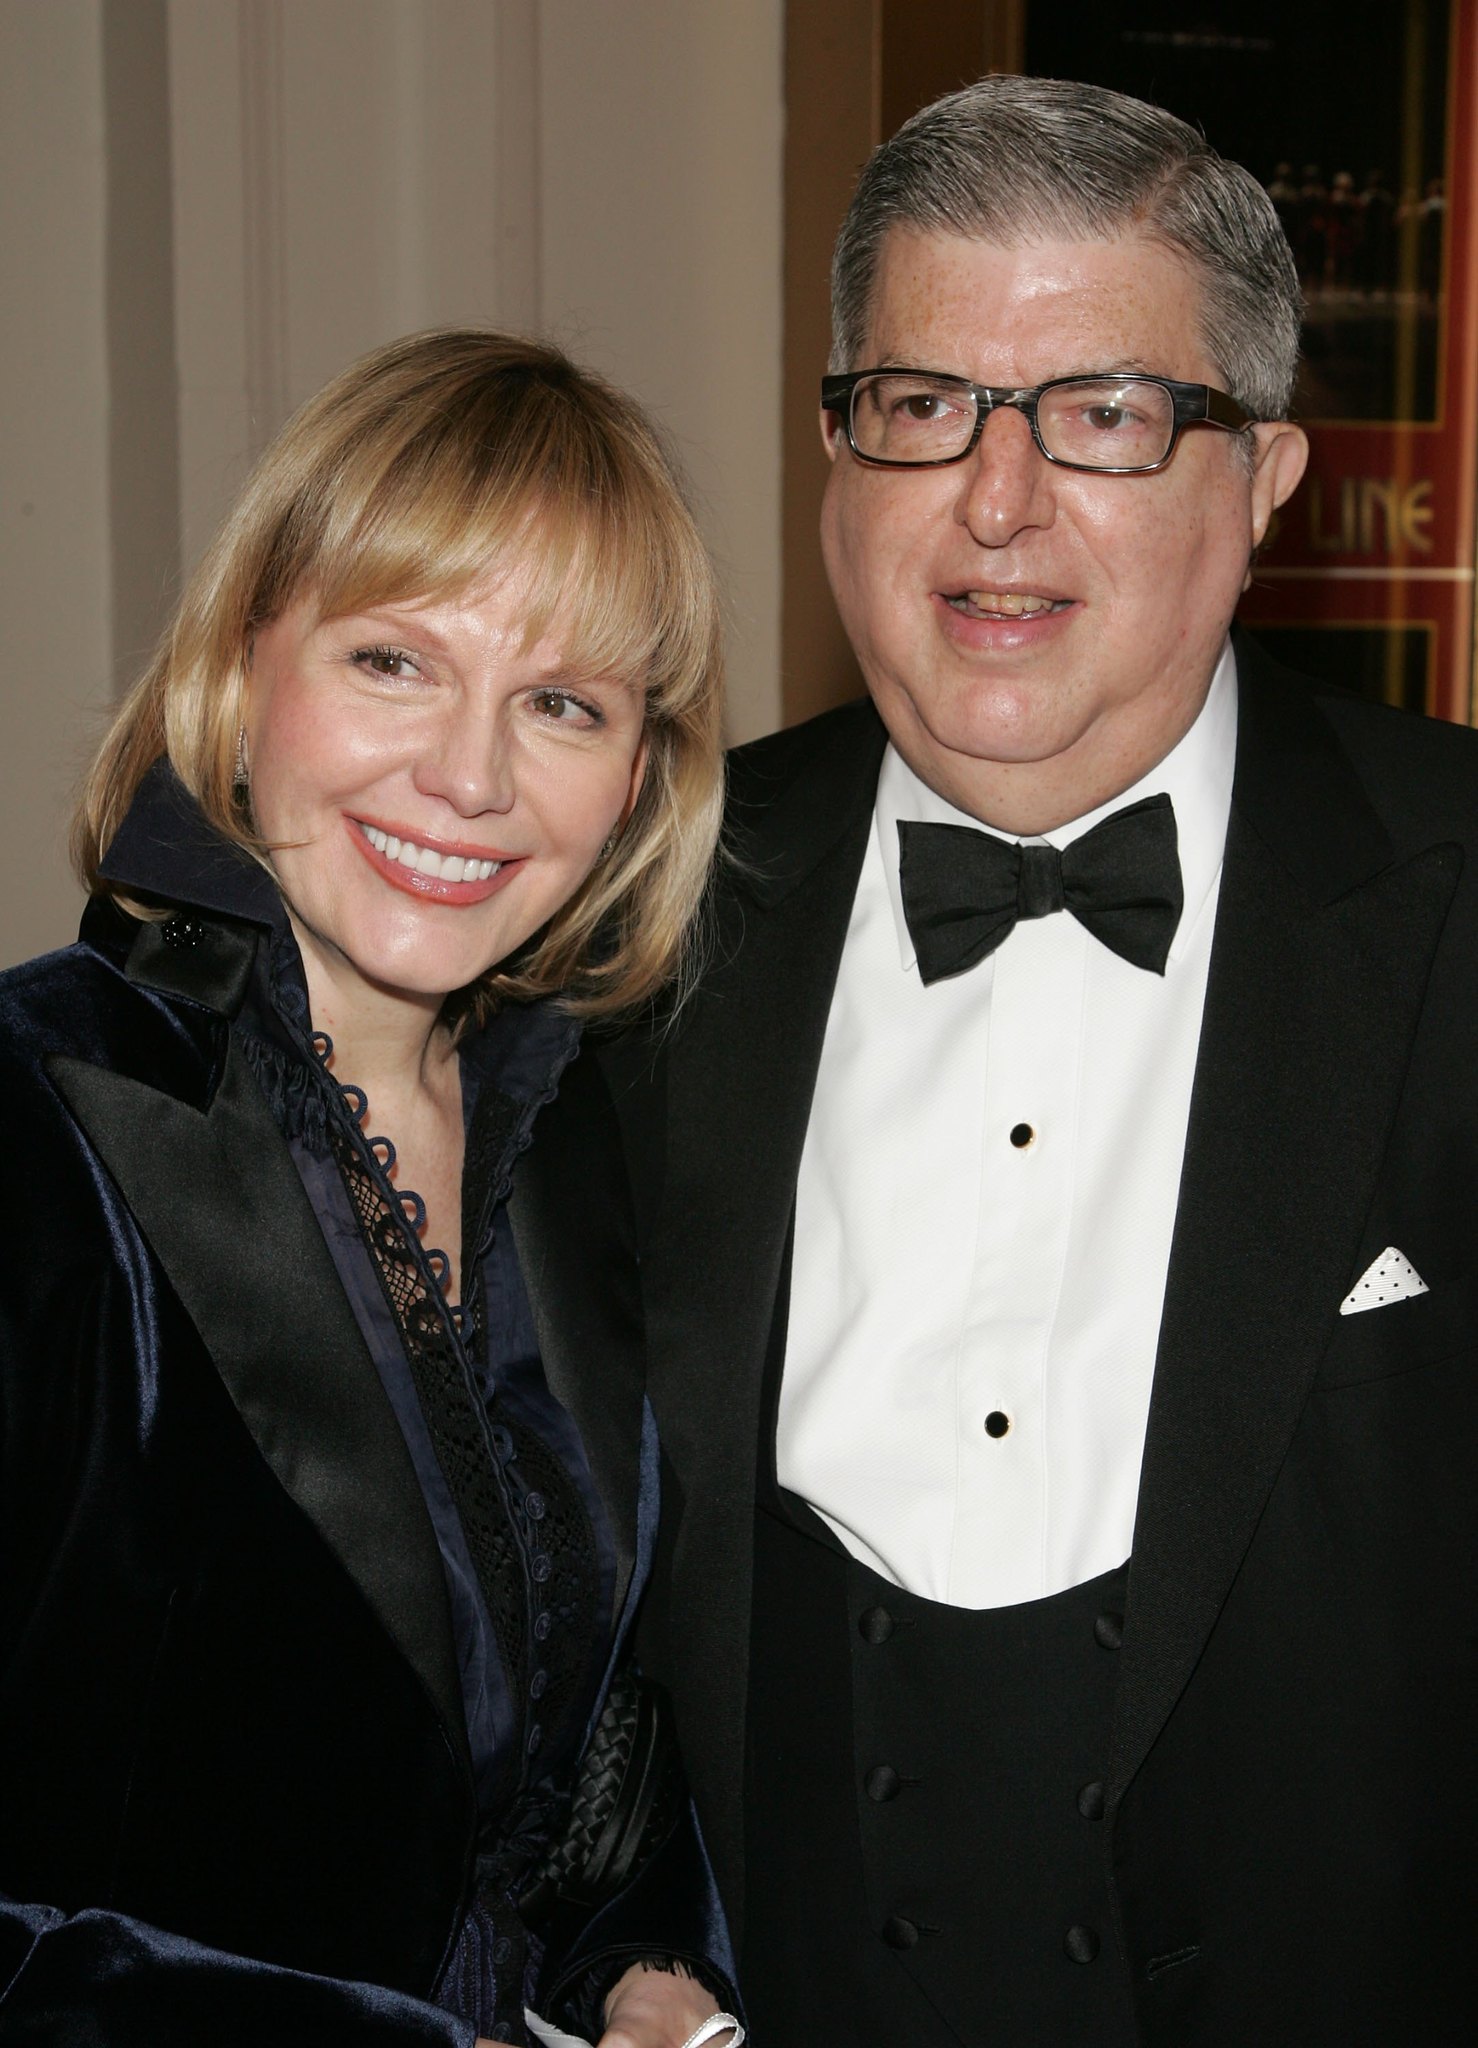 Marvin Hamlisch and his wife Terre Blair